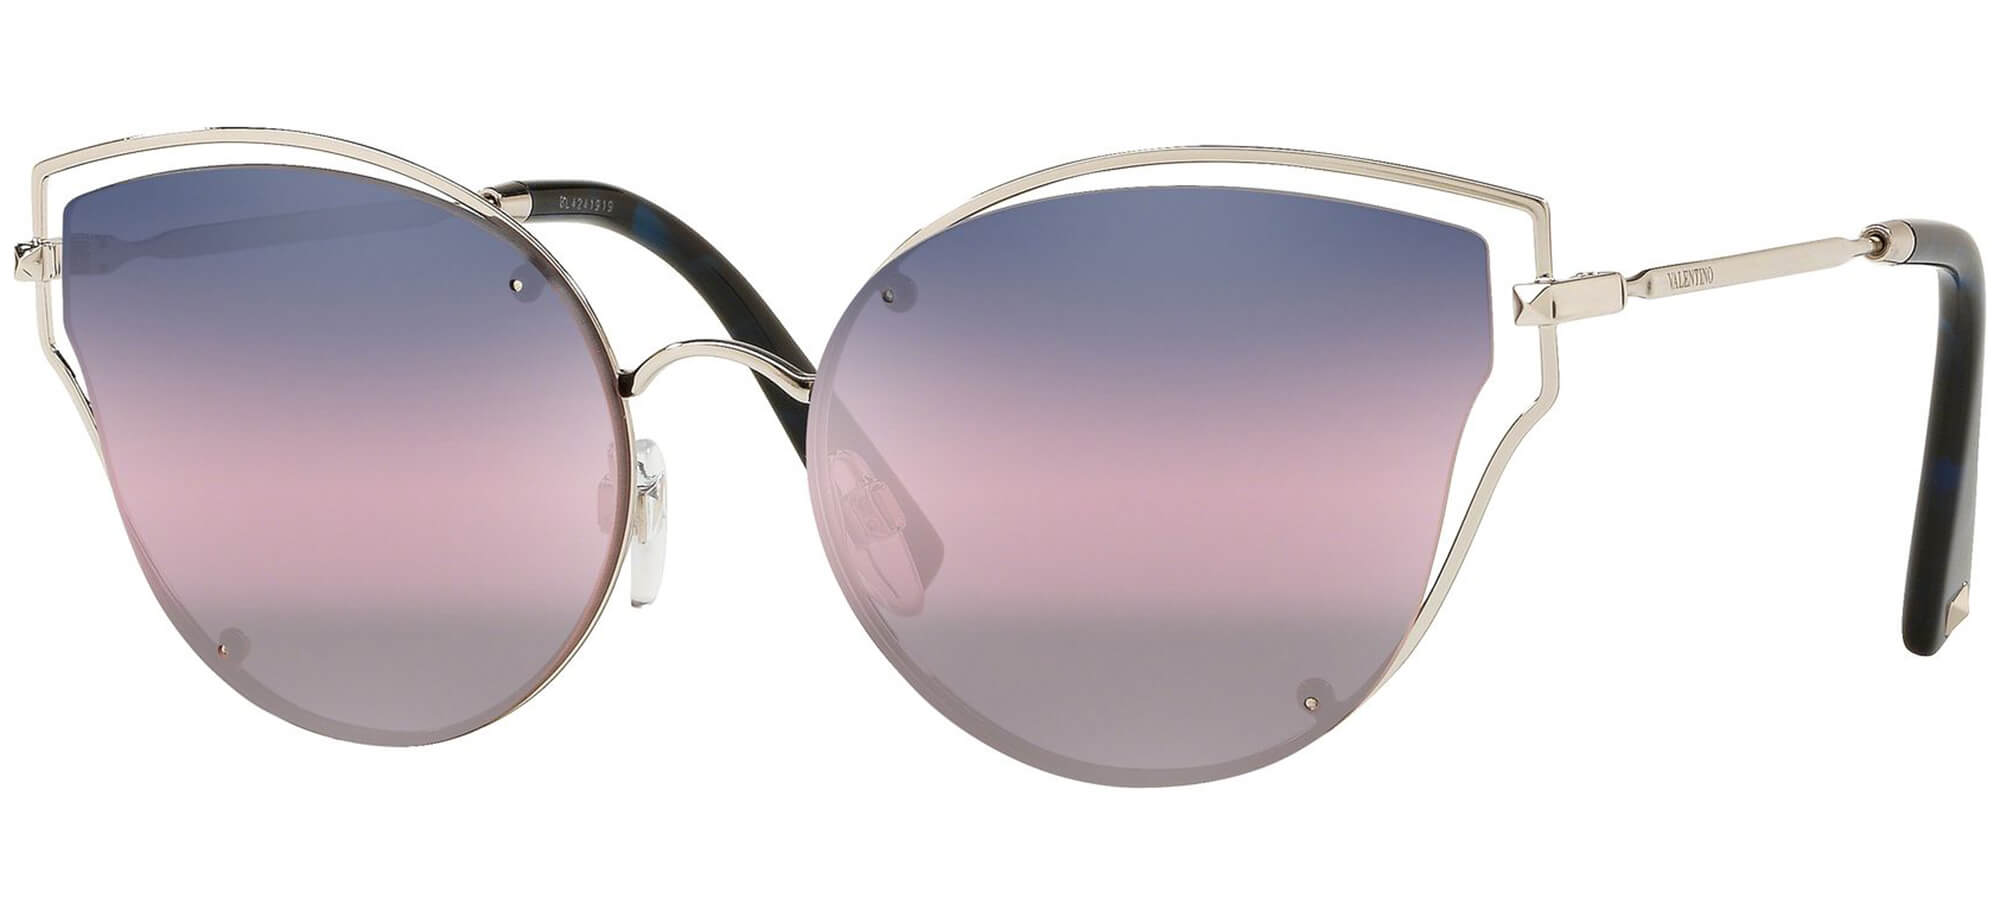 ValentinoVA 2015Silver/pink Blue Shaded (3006/E6)